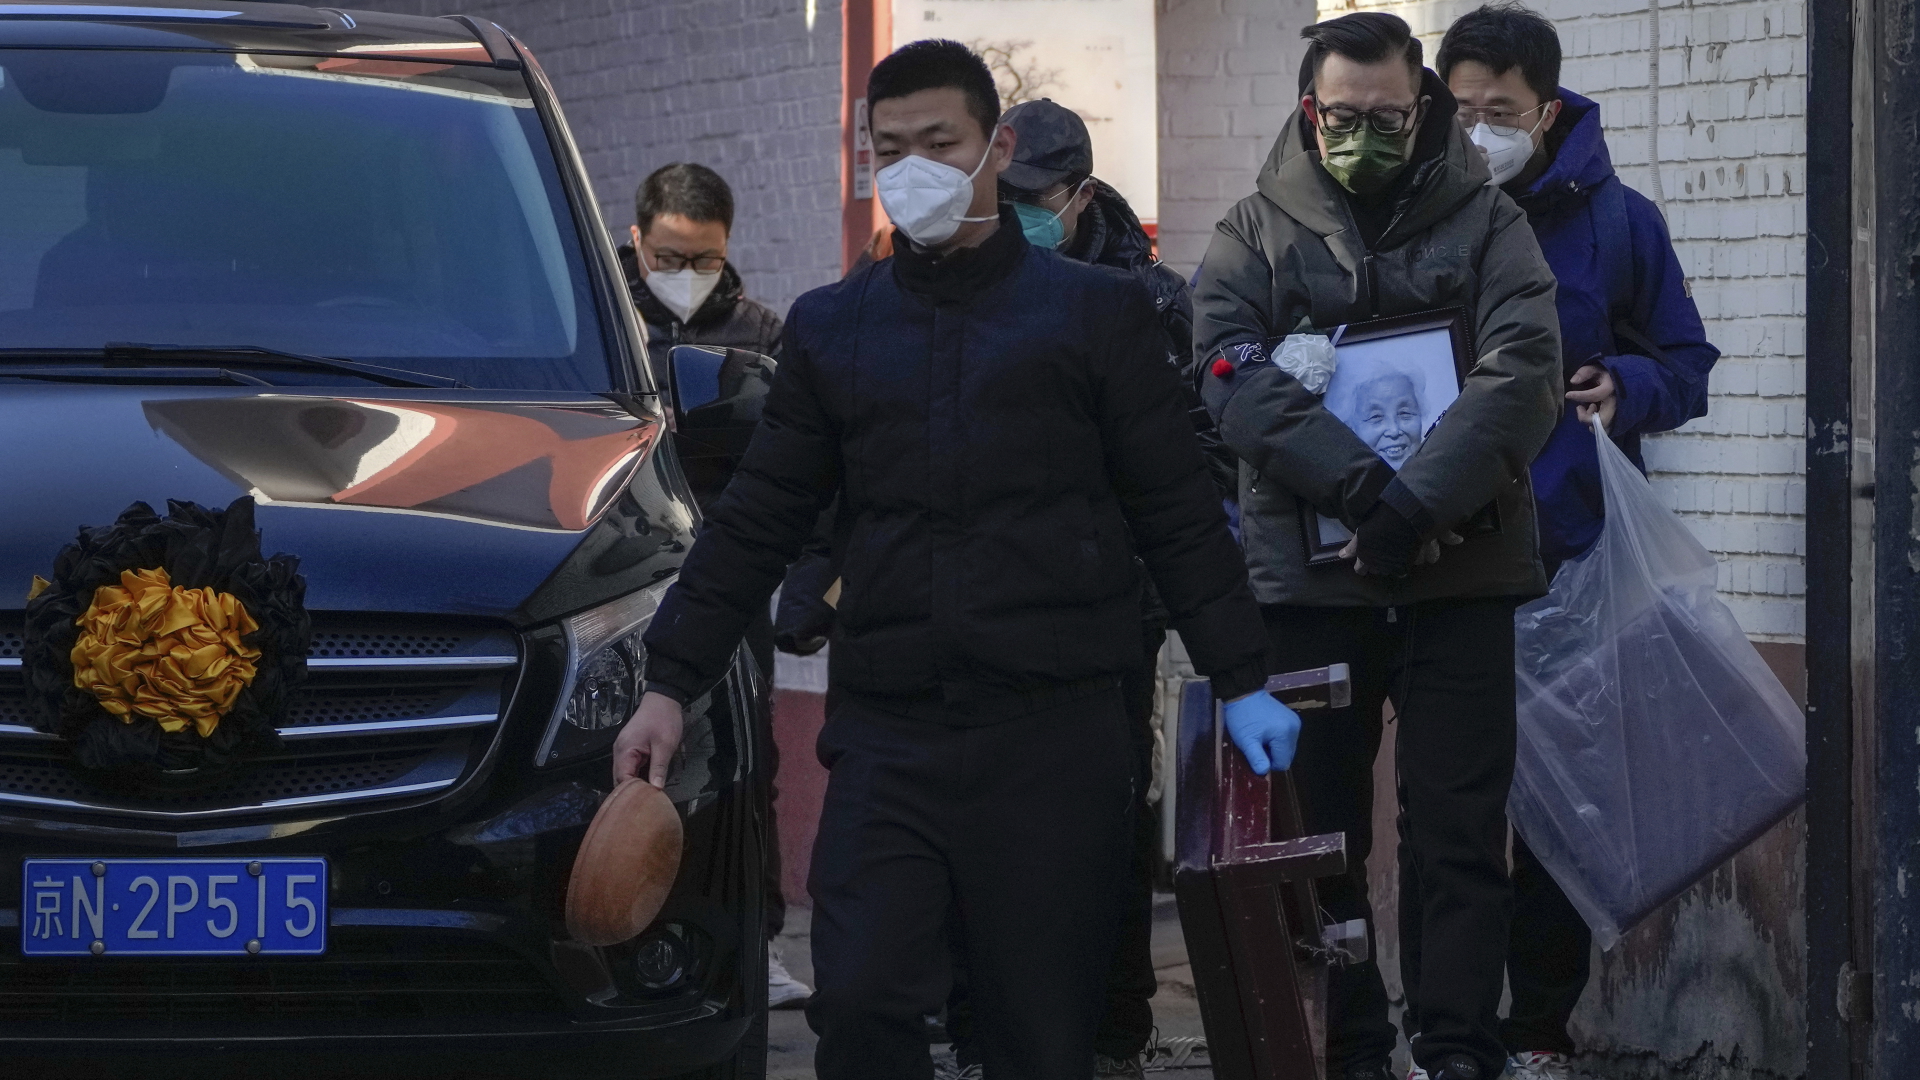 Offizielle Totenzahlen in Peking niedrig – Krematorien melden jedoch Hochbetrieb